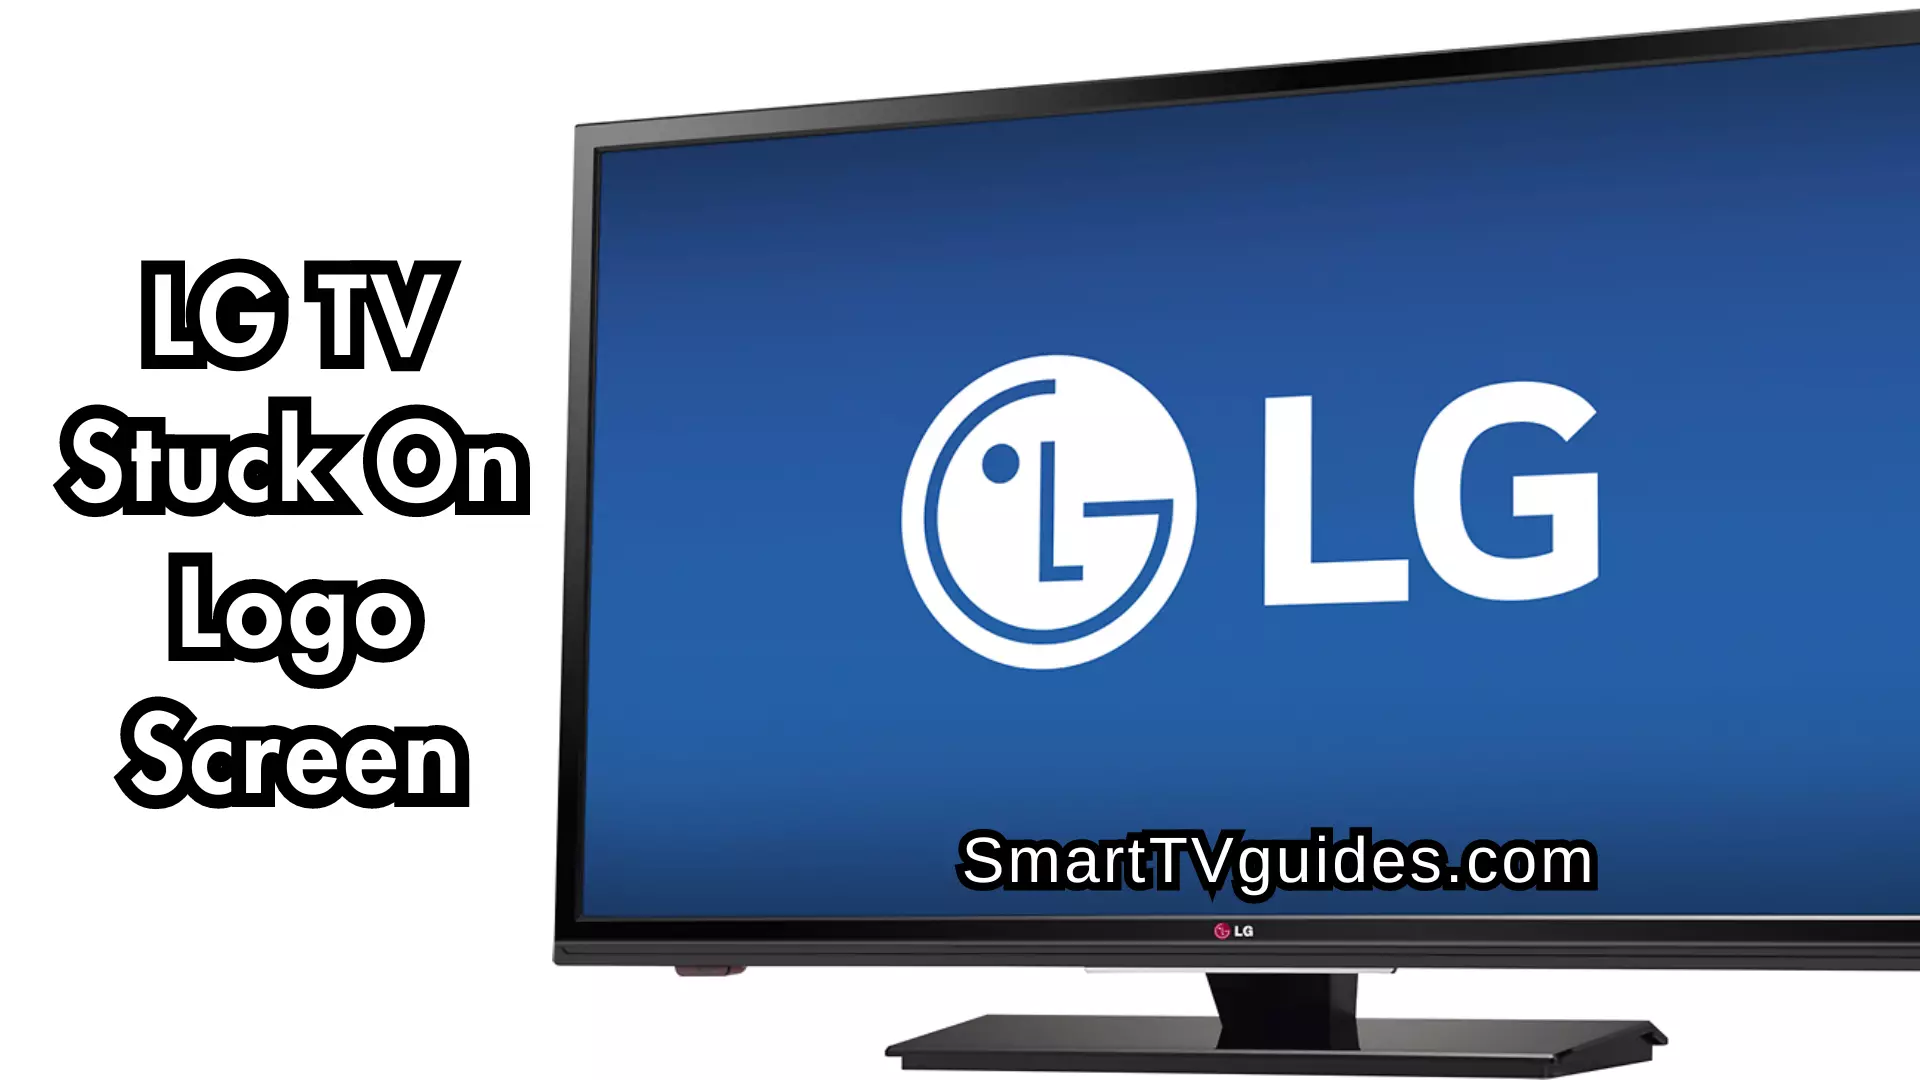 LG TV Stuck On Logo Screen